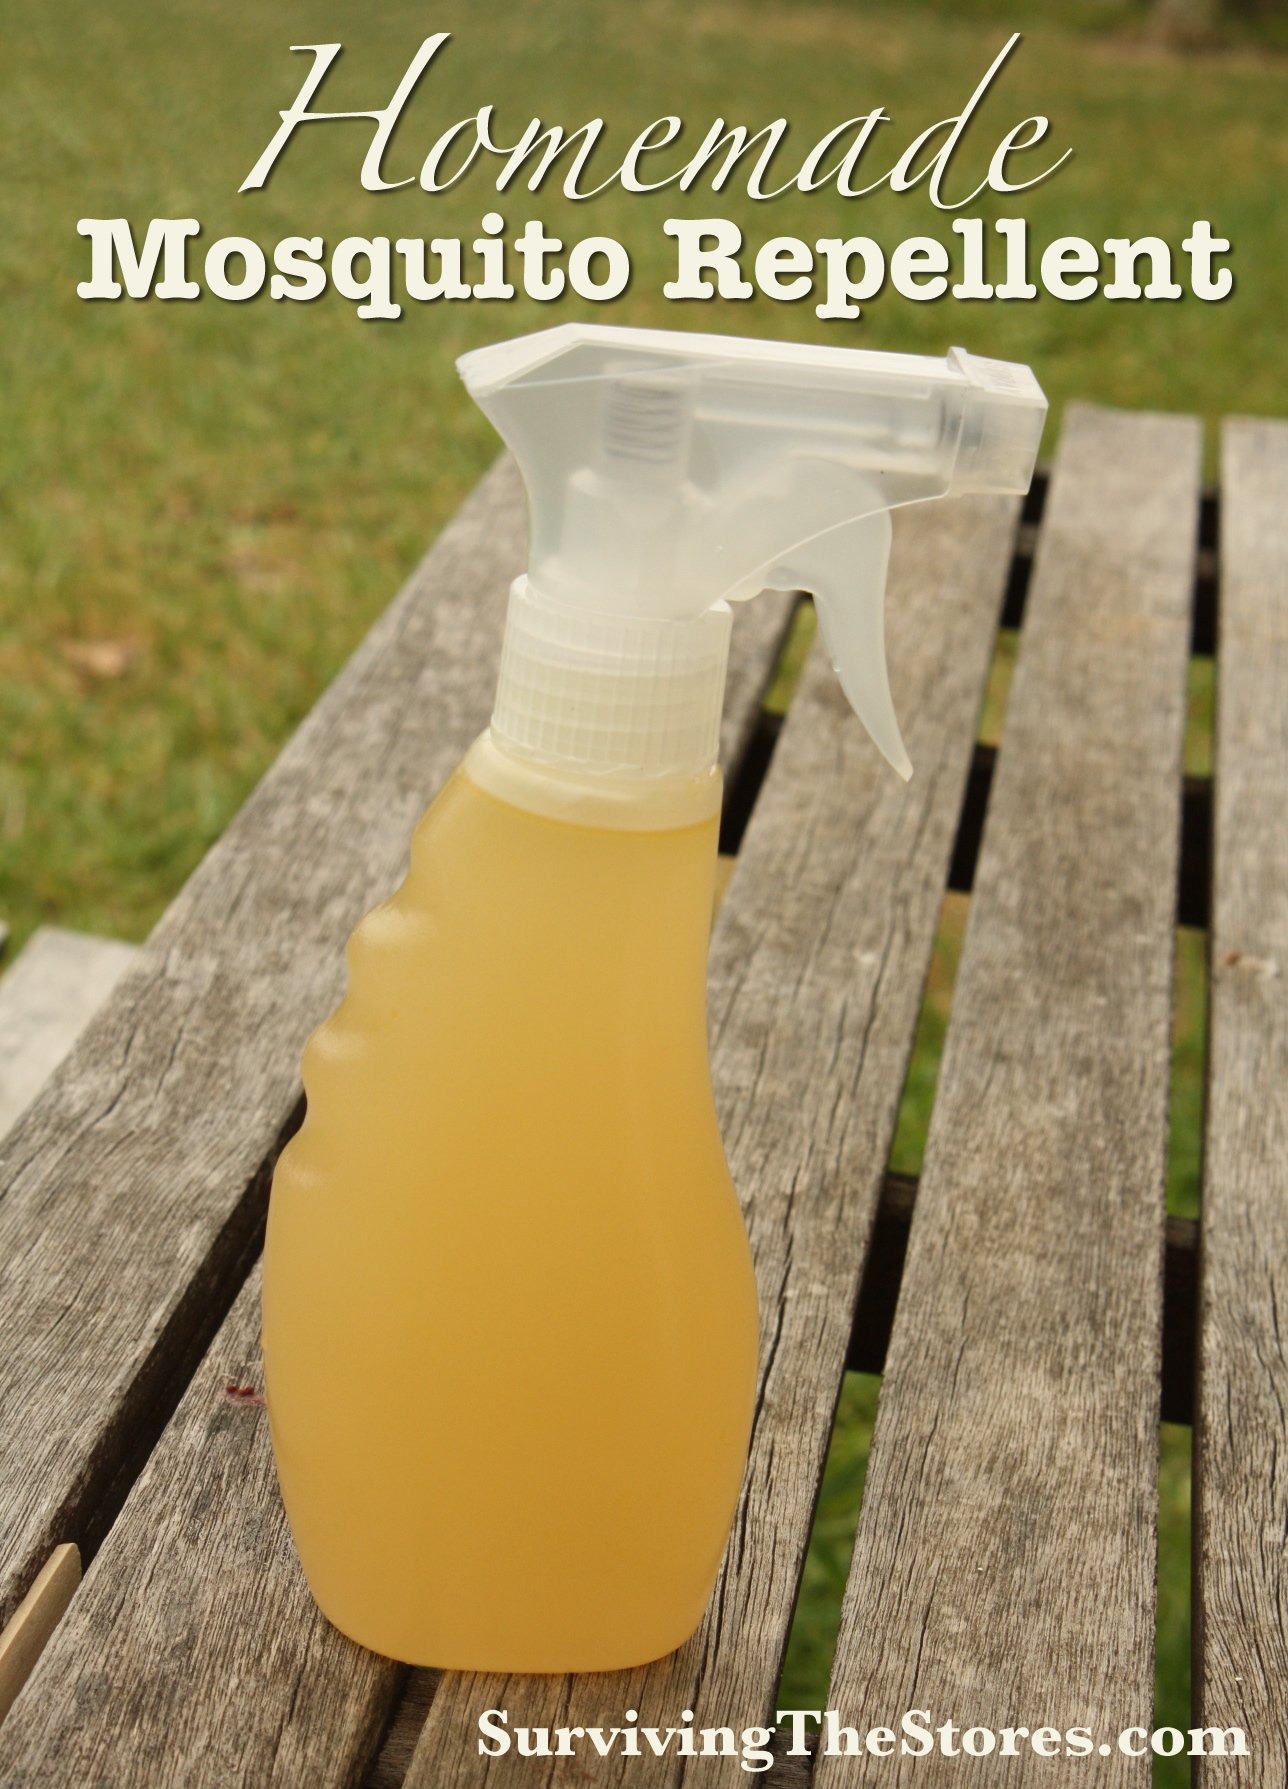 homemade mosquito spray for yard